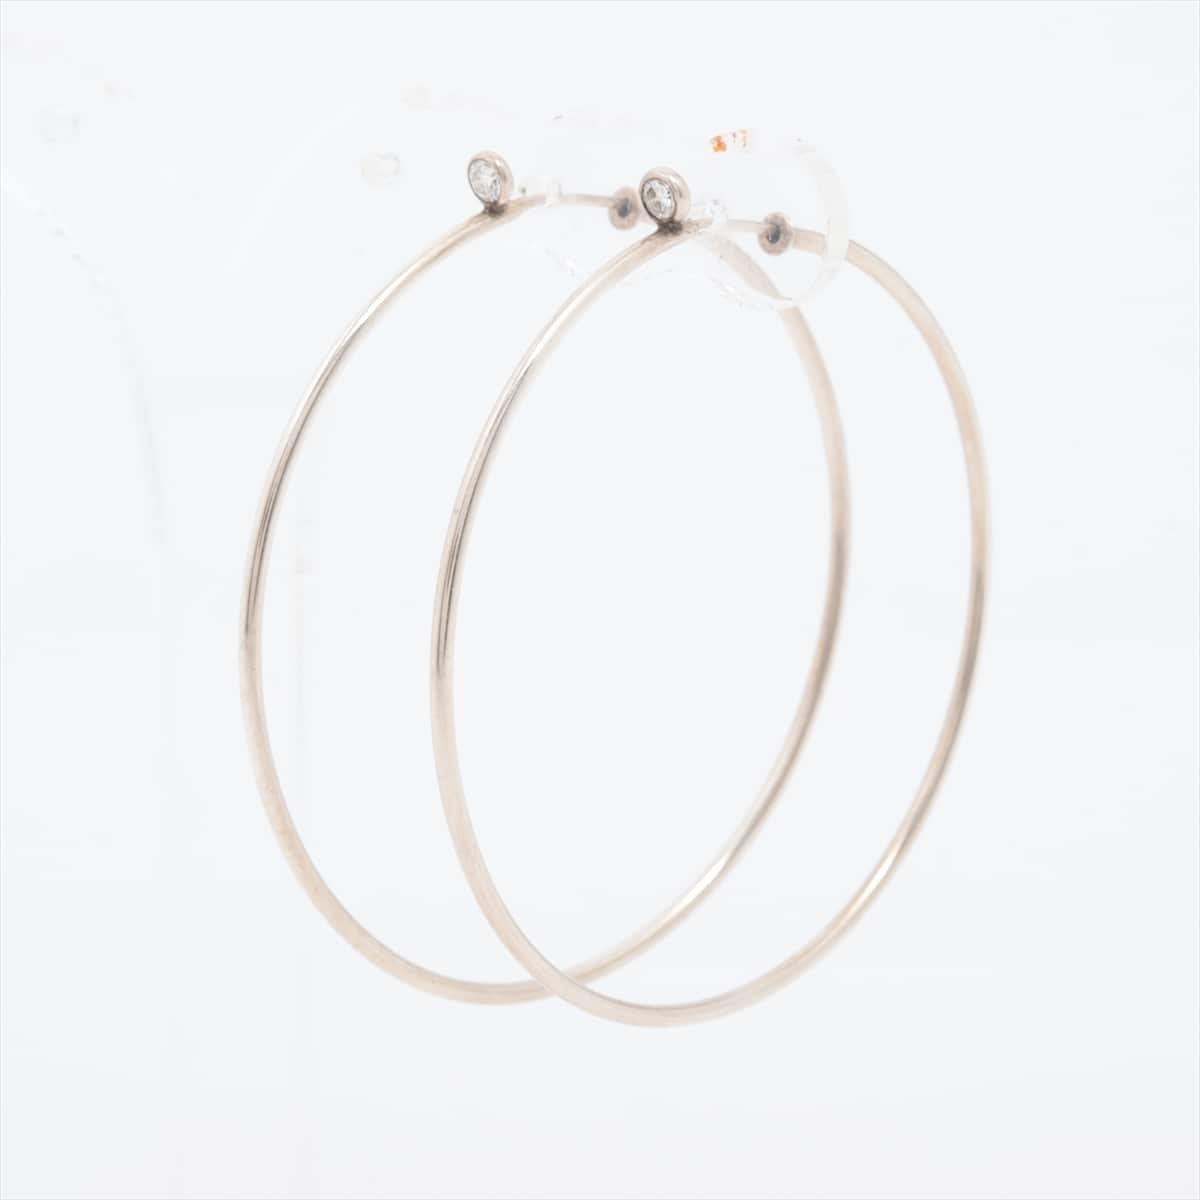 Tiffany Diamond Hoop Single row Piercing jewelry (for both ears) 925 1.7g Silver Diamond